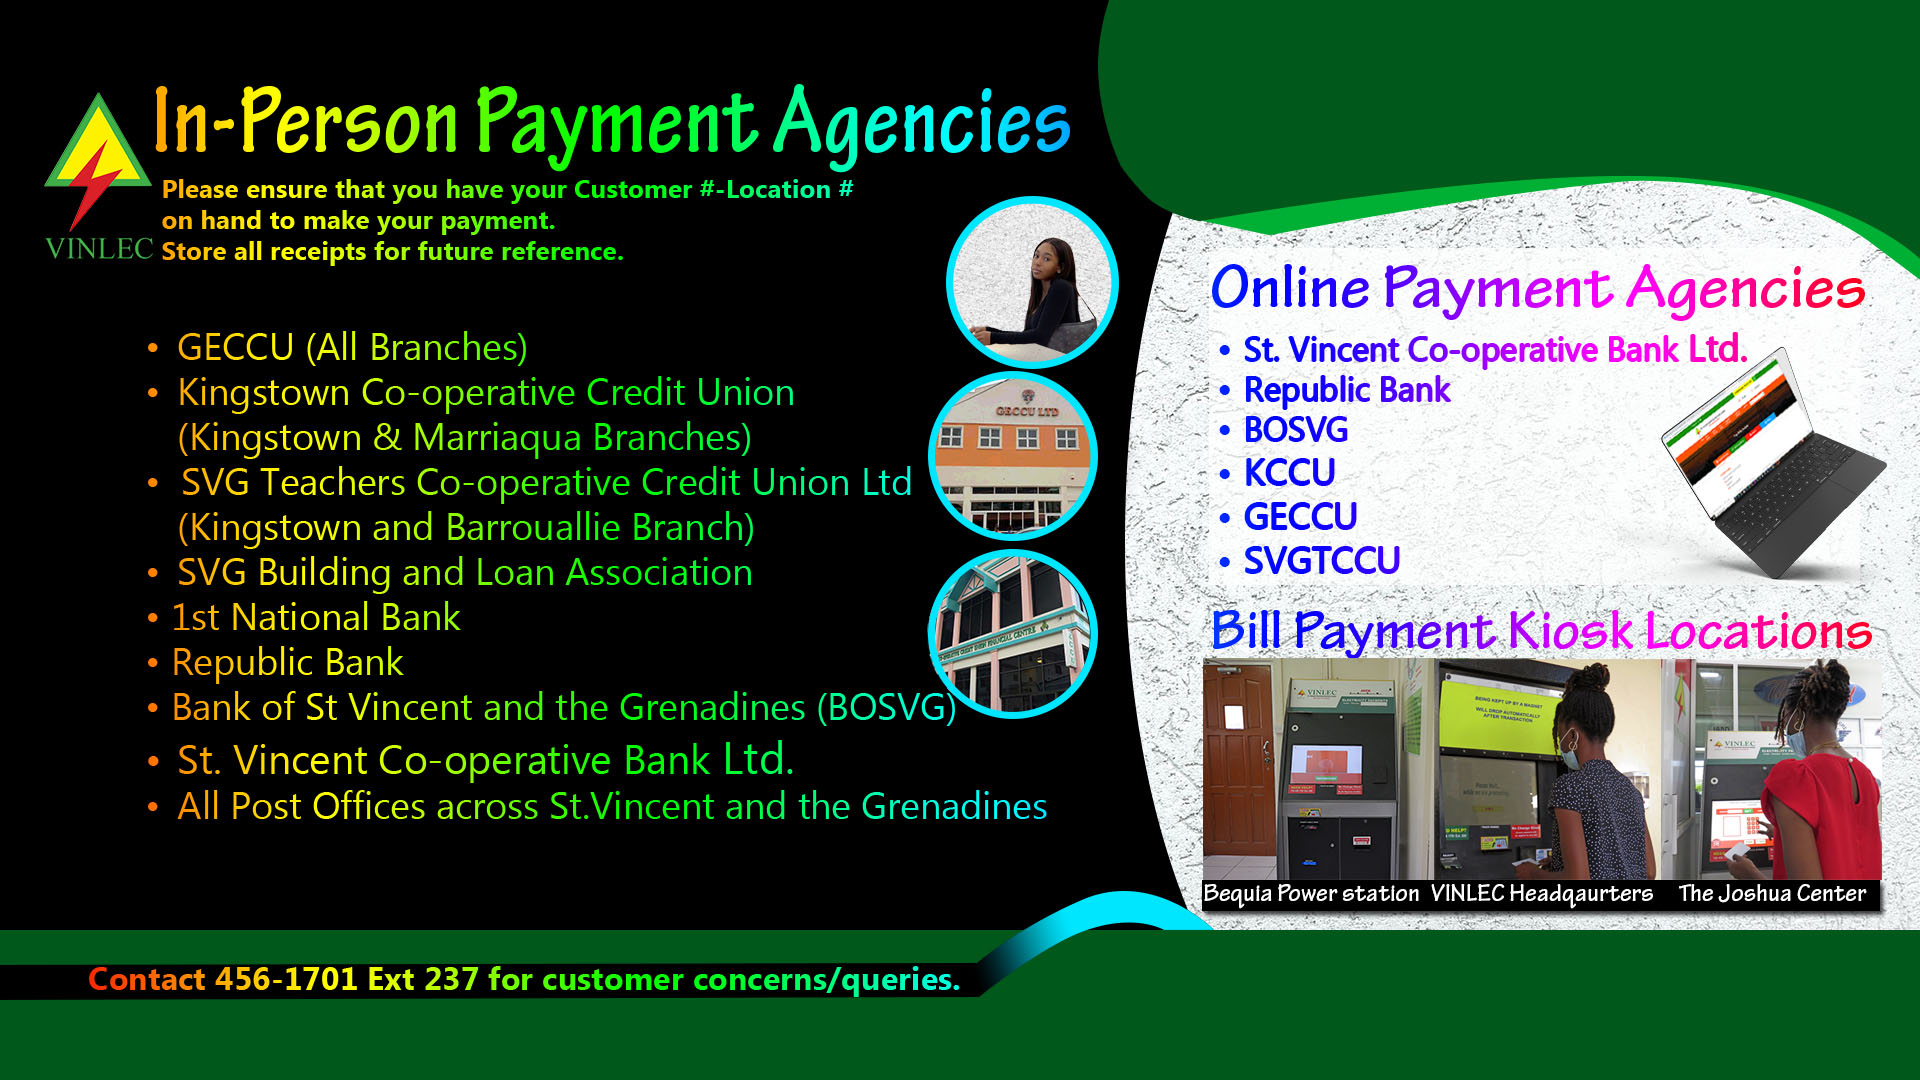 Payment Agencies and kiosks